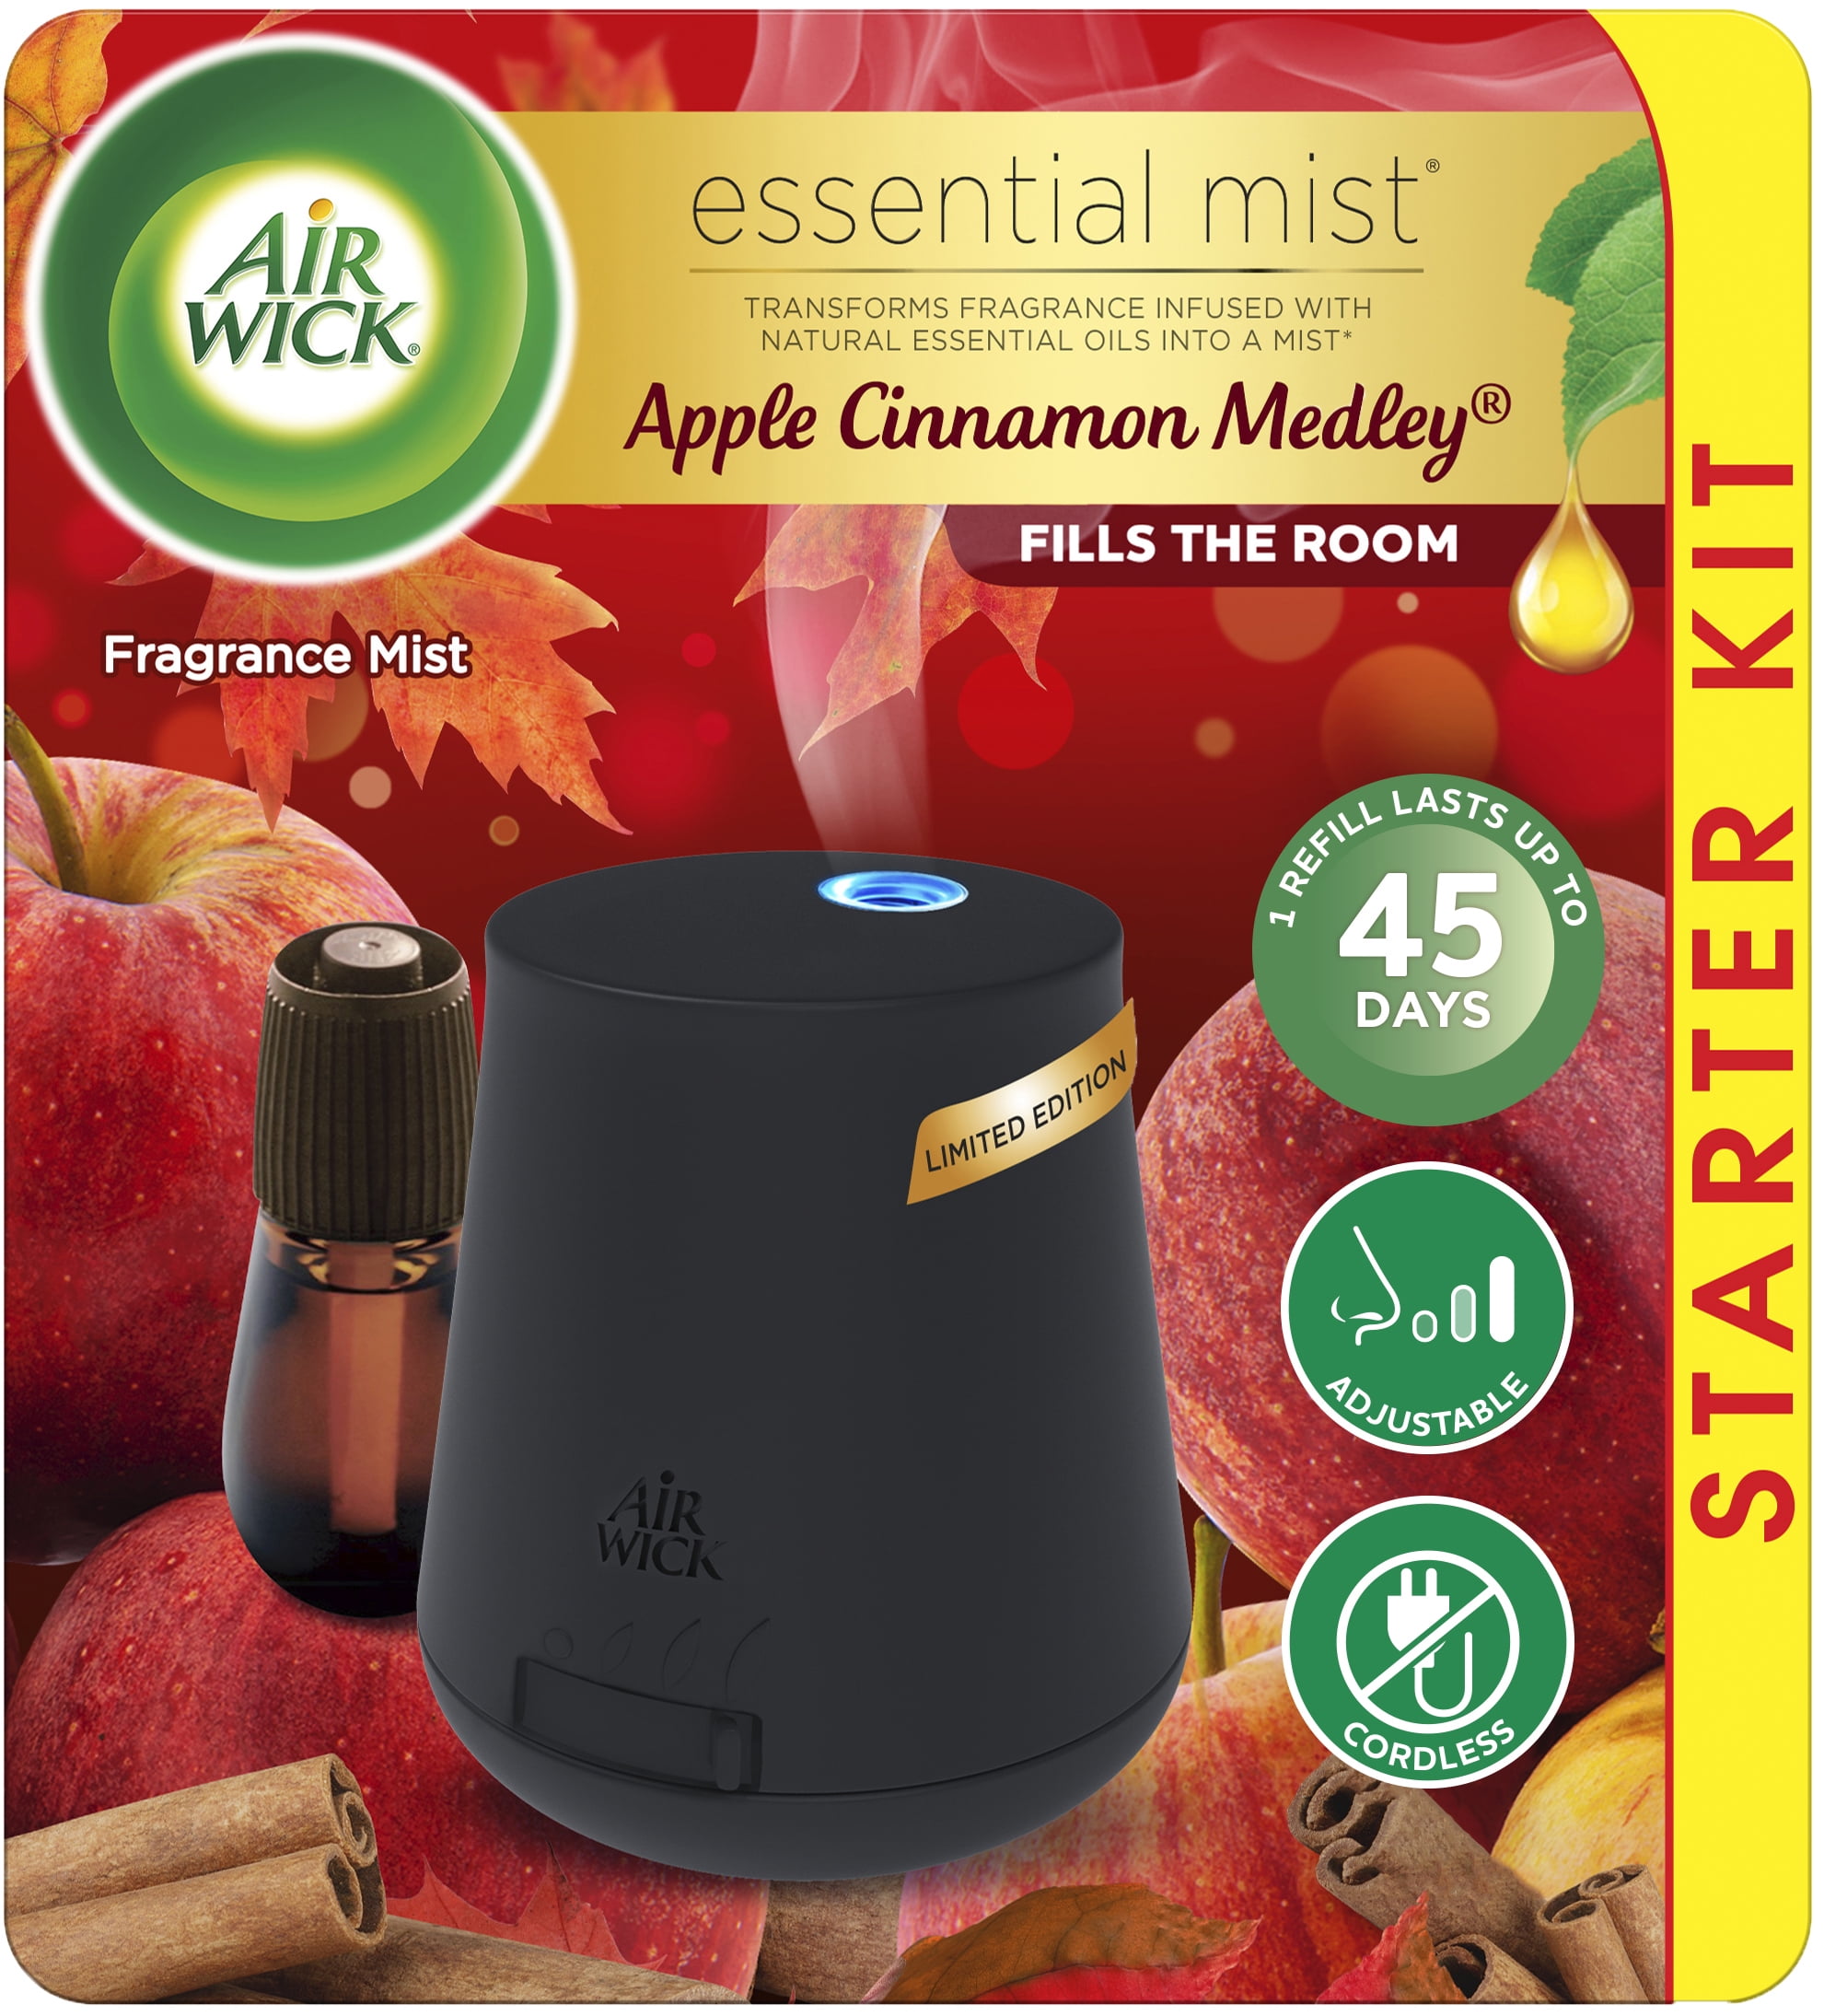 Air Wick Essential Mist Fragrance Mist Diffuser, Apple Cinnamon Medley